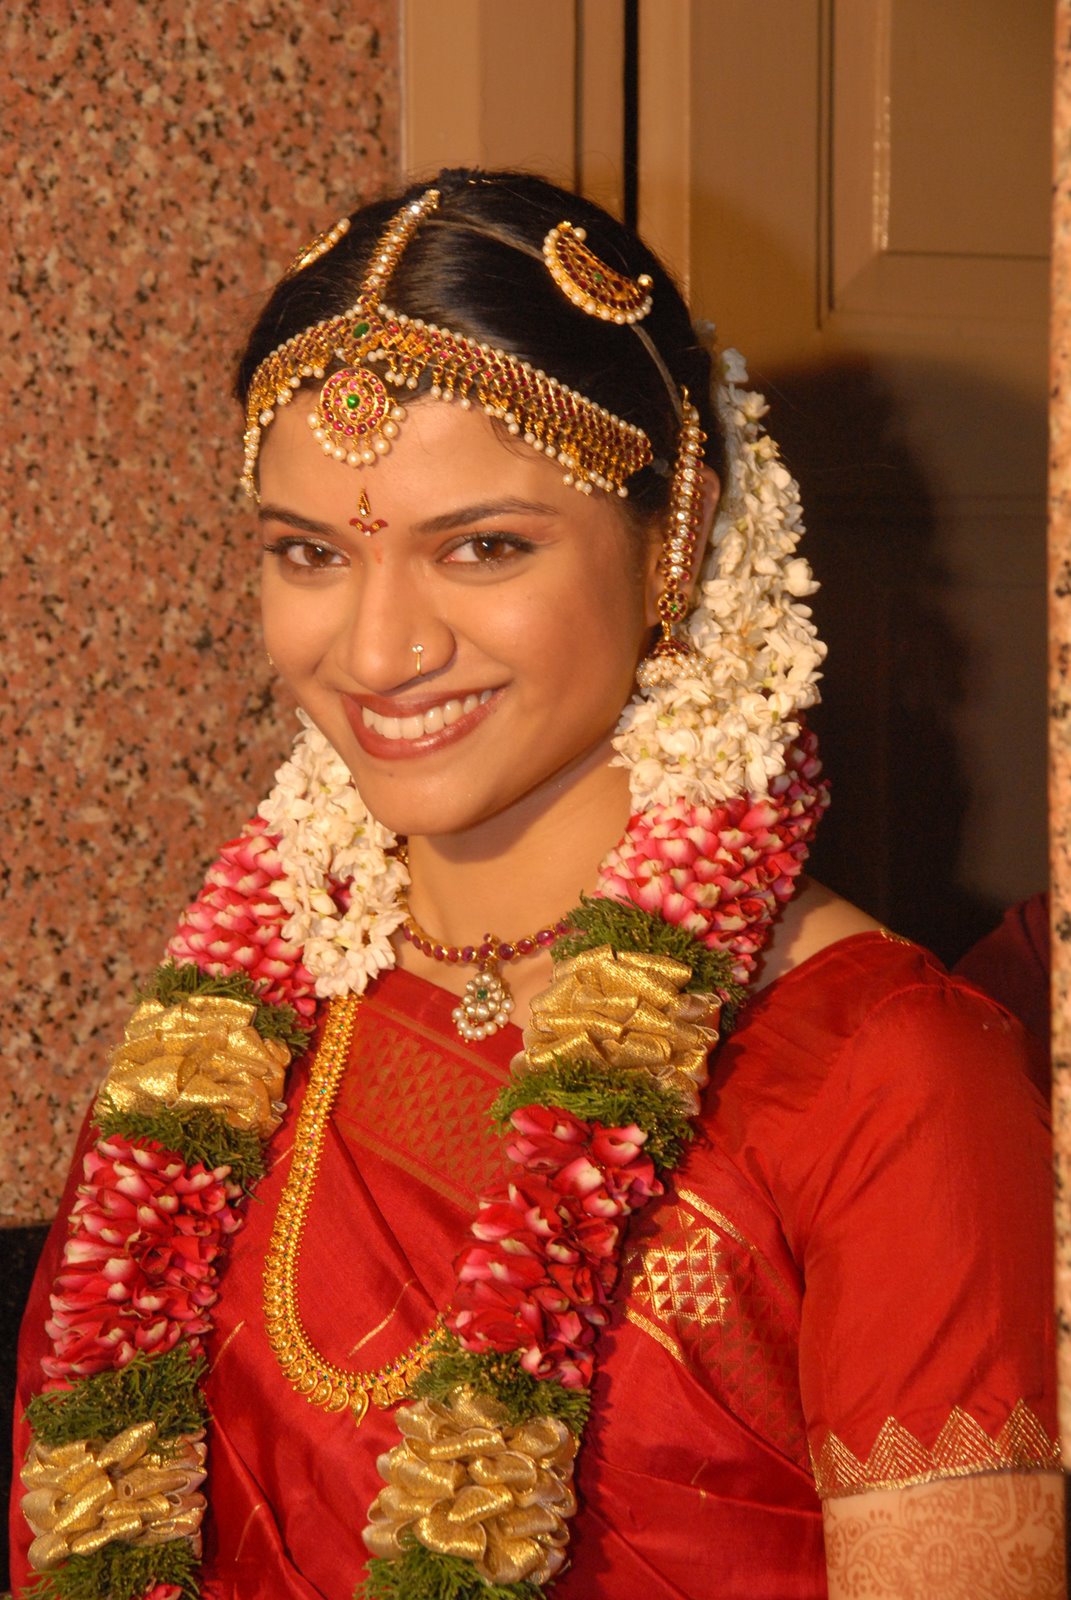 Fashion world: South indian bridal hair style - Part 5